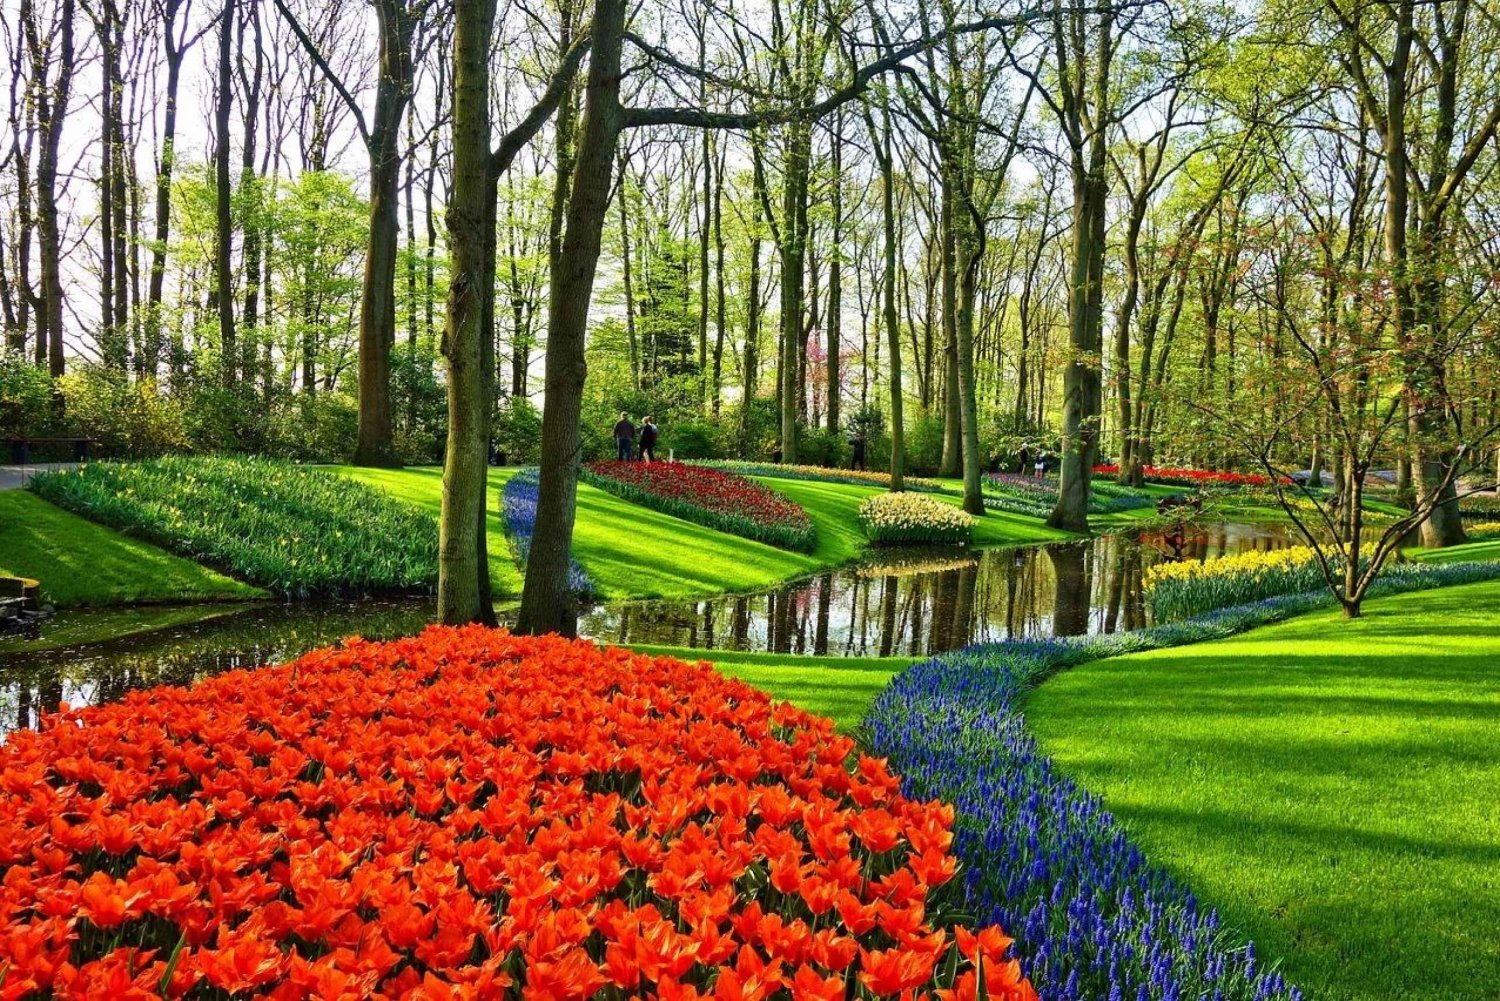 Keukenhof Gardens and Tulip Experience Tour from Amsterdam